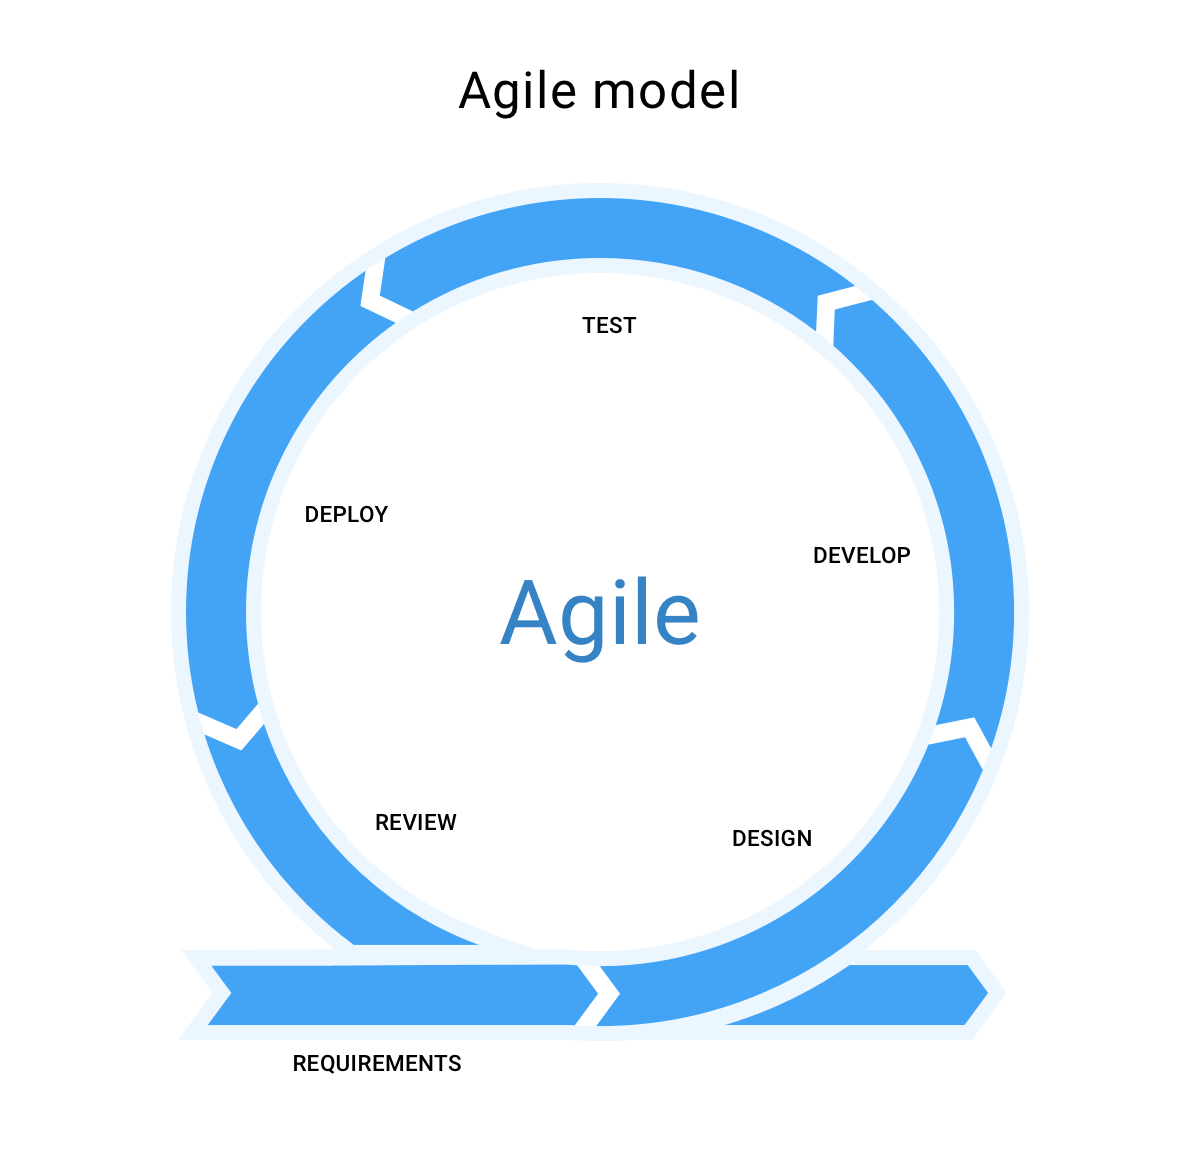 agile processes